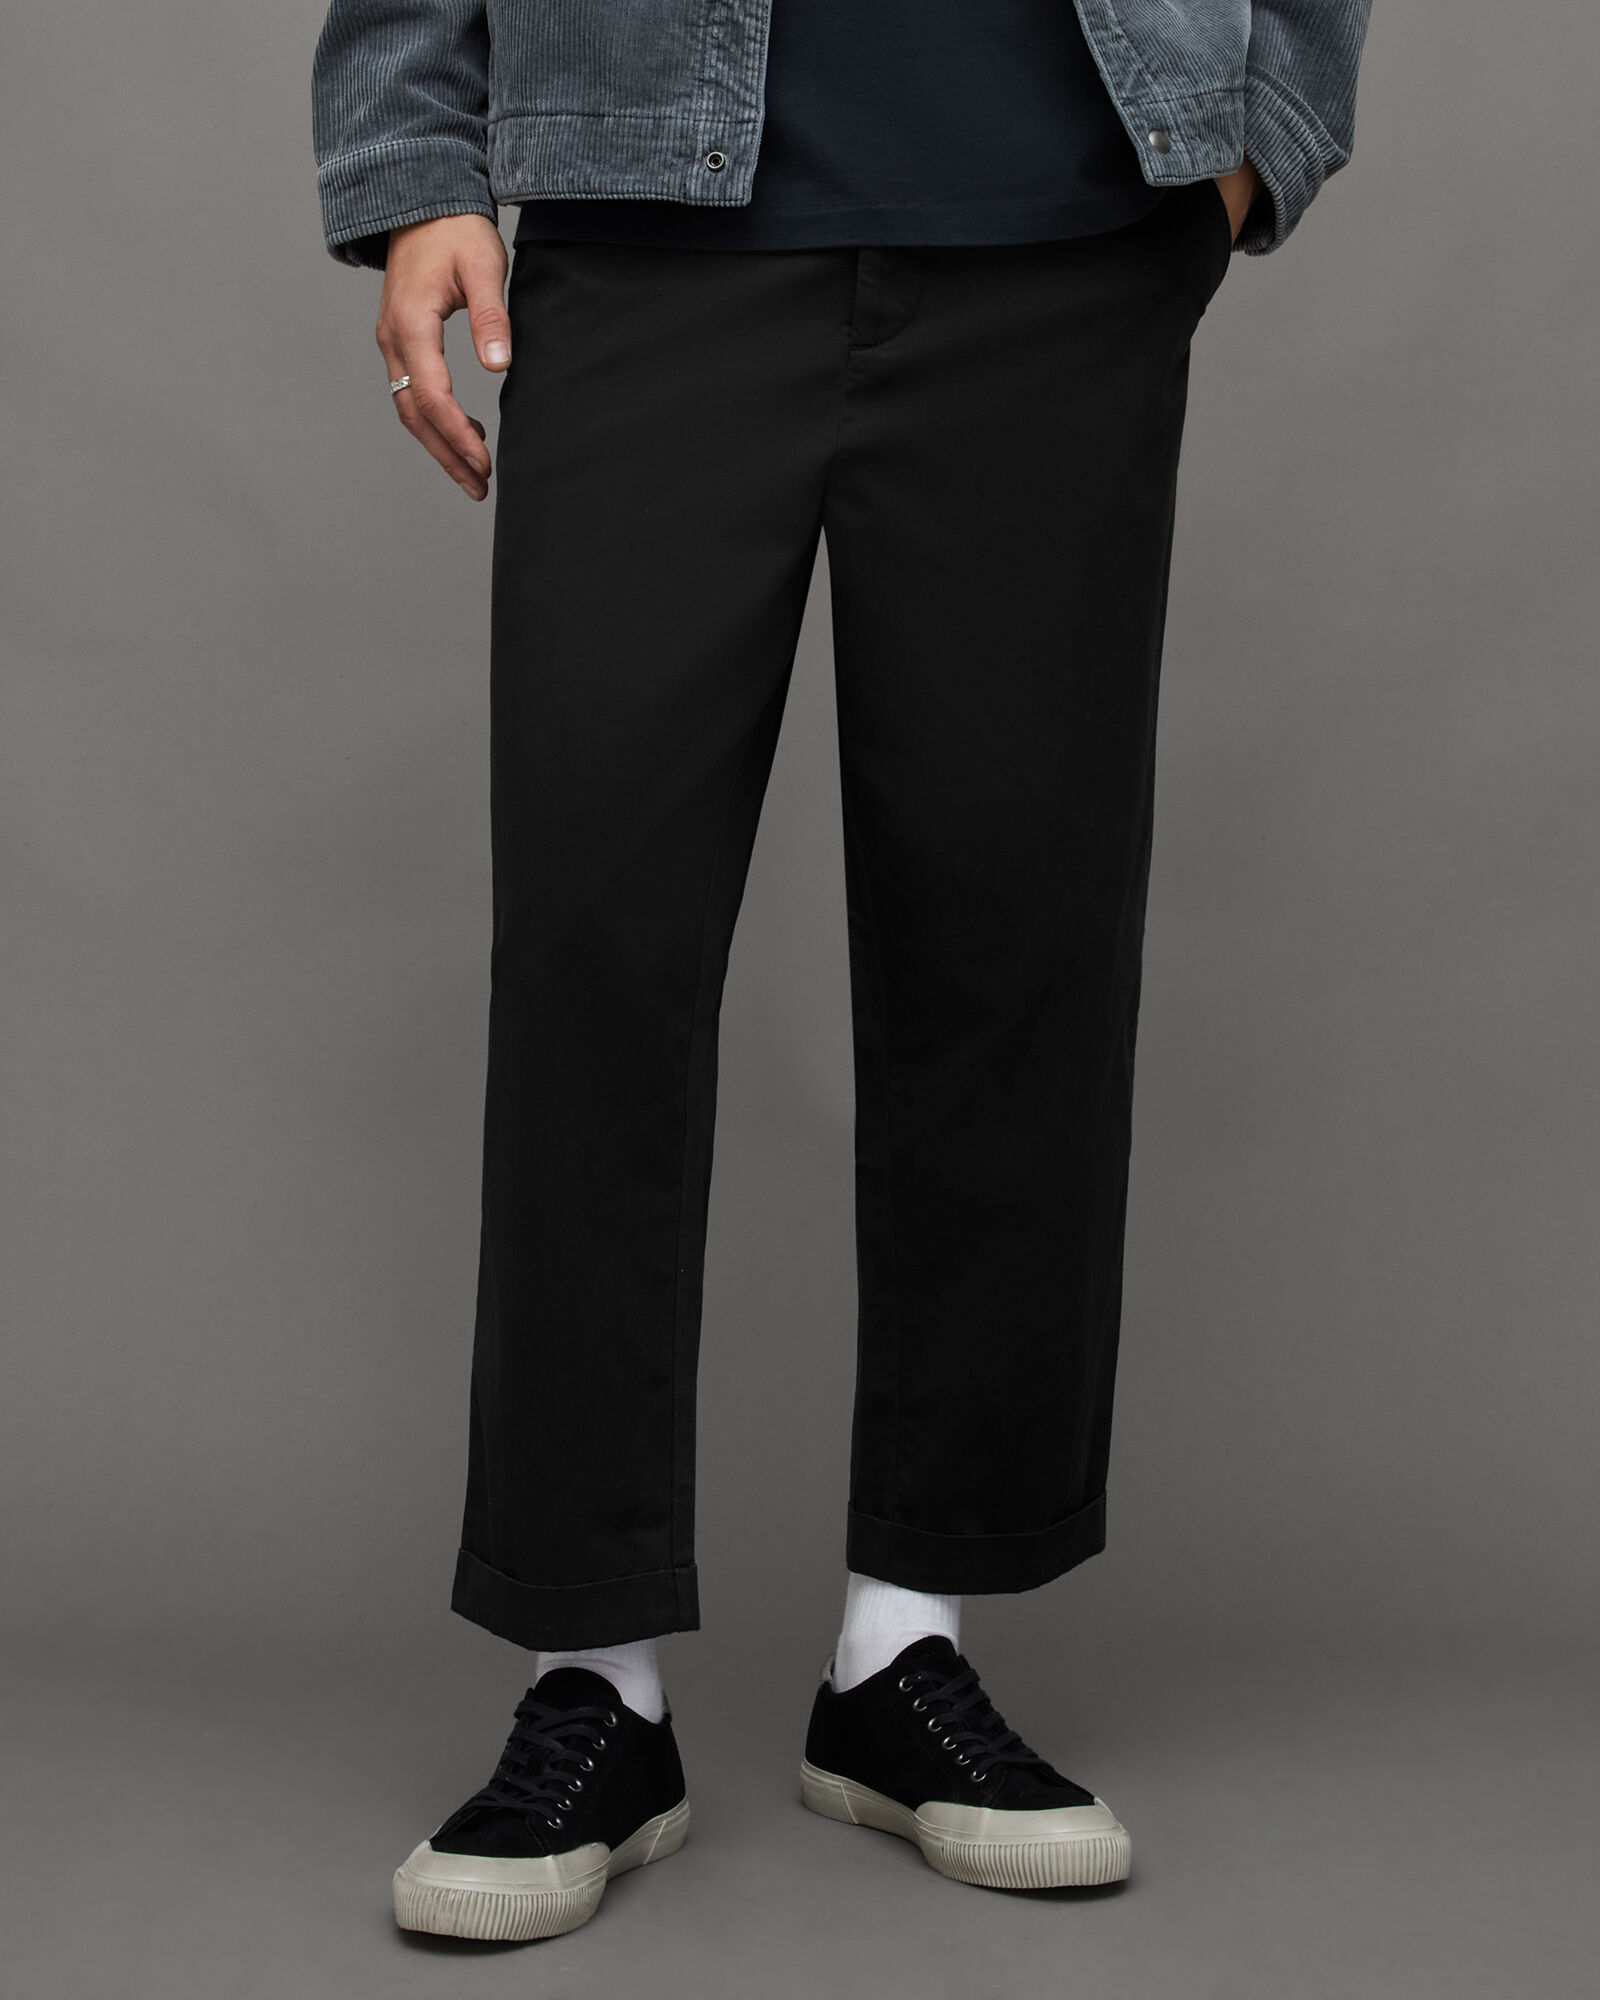 Buy Men's Running Breathable Cropped Trousers Dry+ - Black Online |  Decathlon